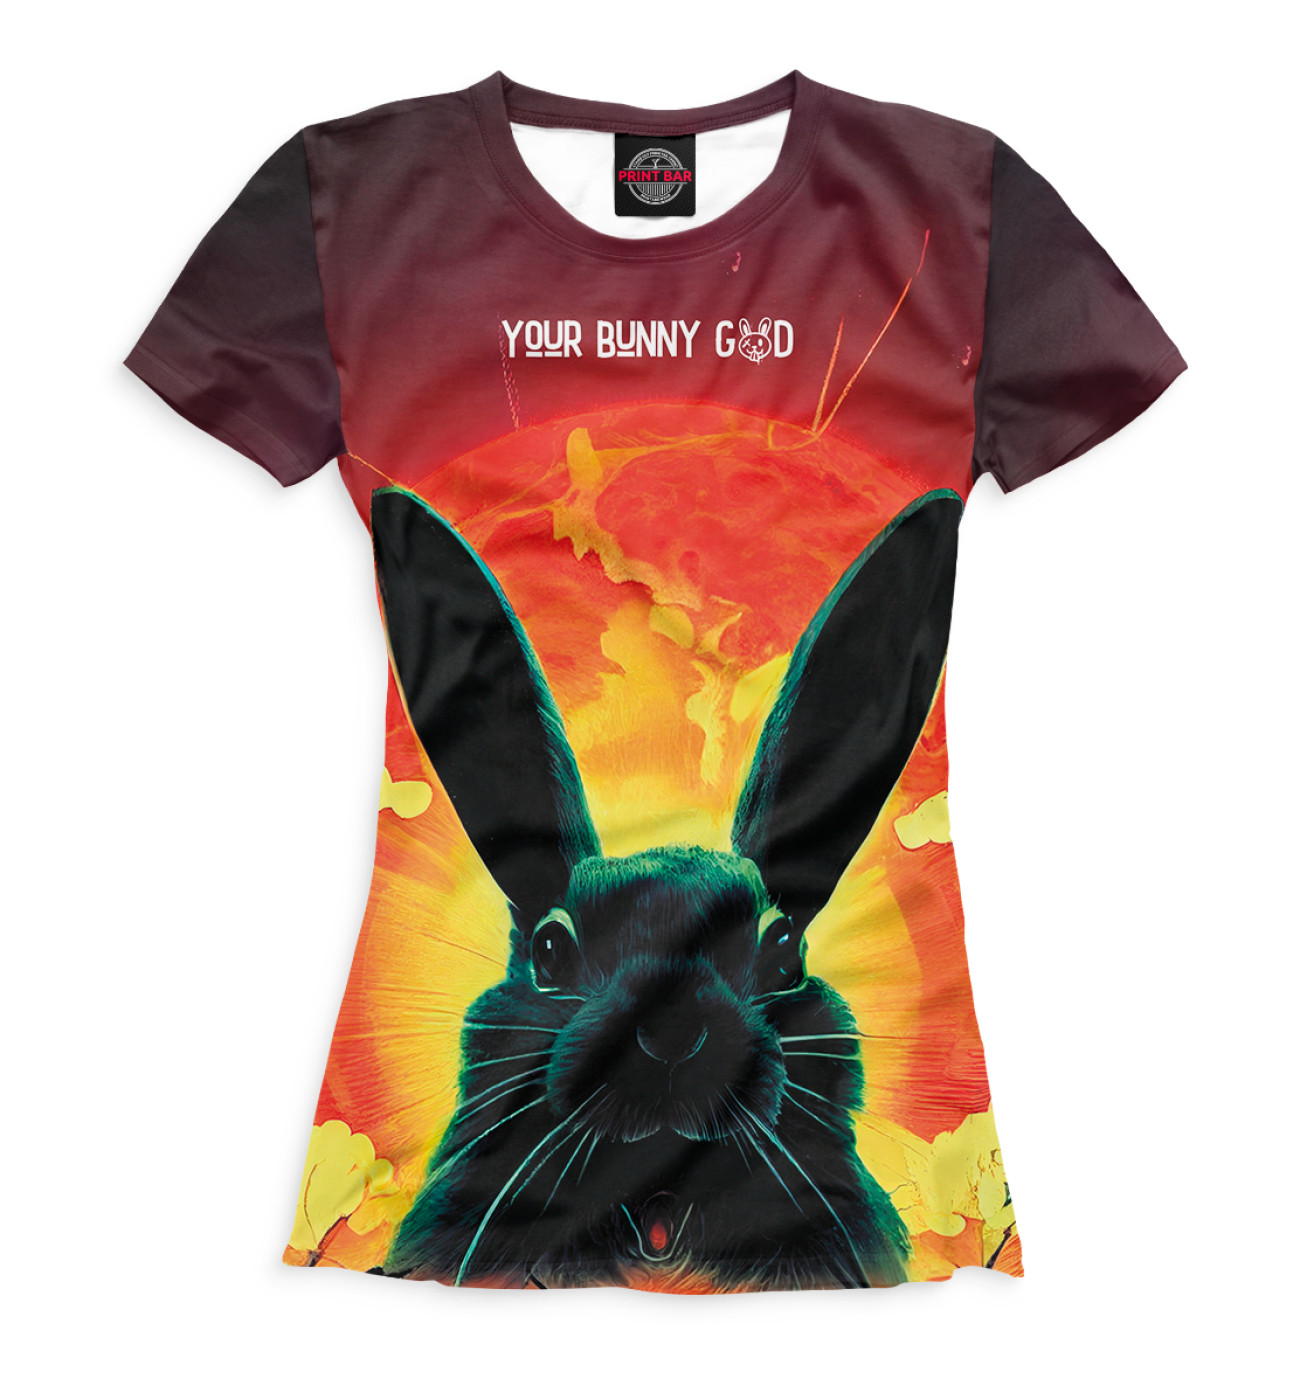 Футболка для девочек Your bunny god, артикул: YOT-491428-fut-1